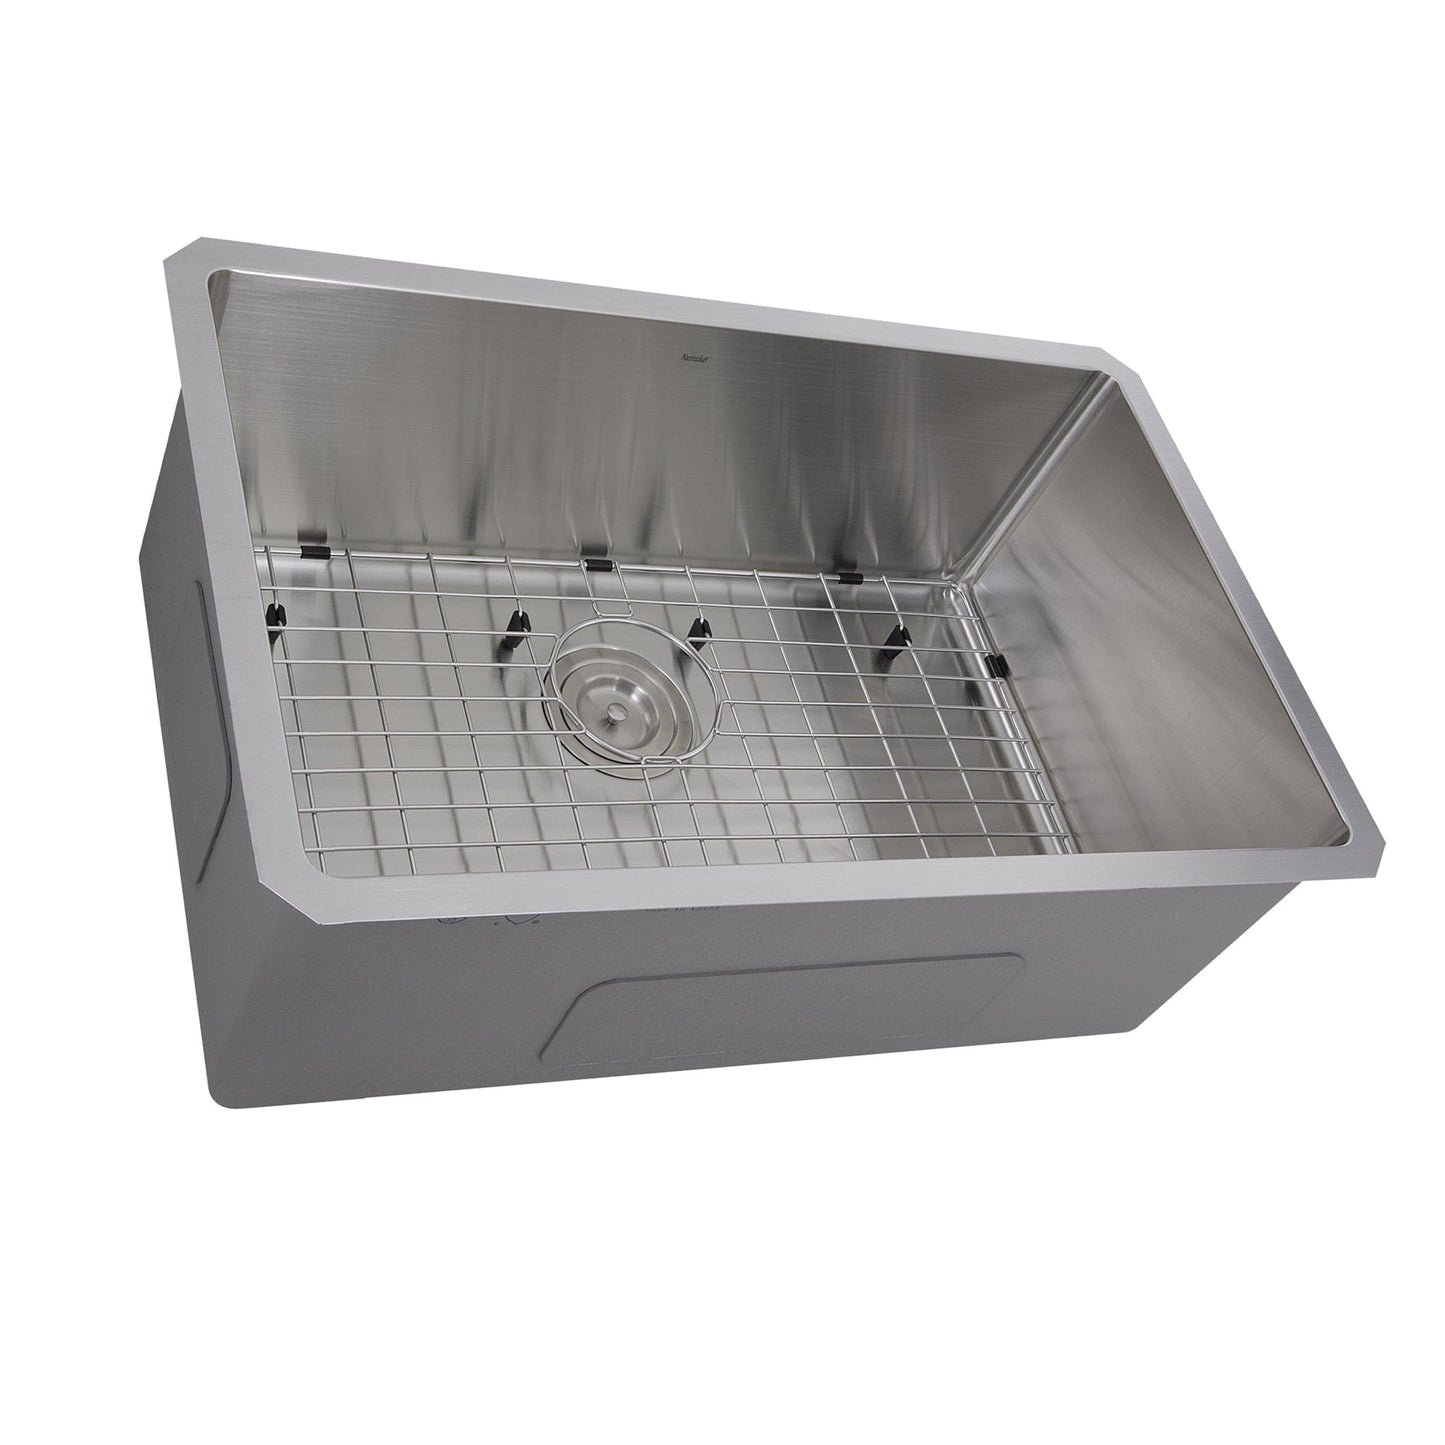 Nantucket 28" Pro Series Undermount Stainless Steel Kitchen Sink SR2818-16